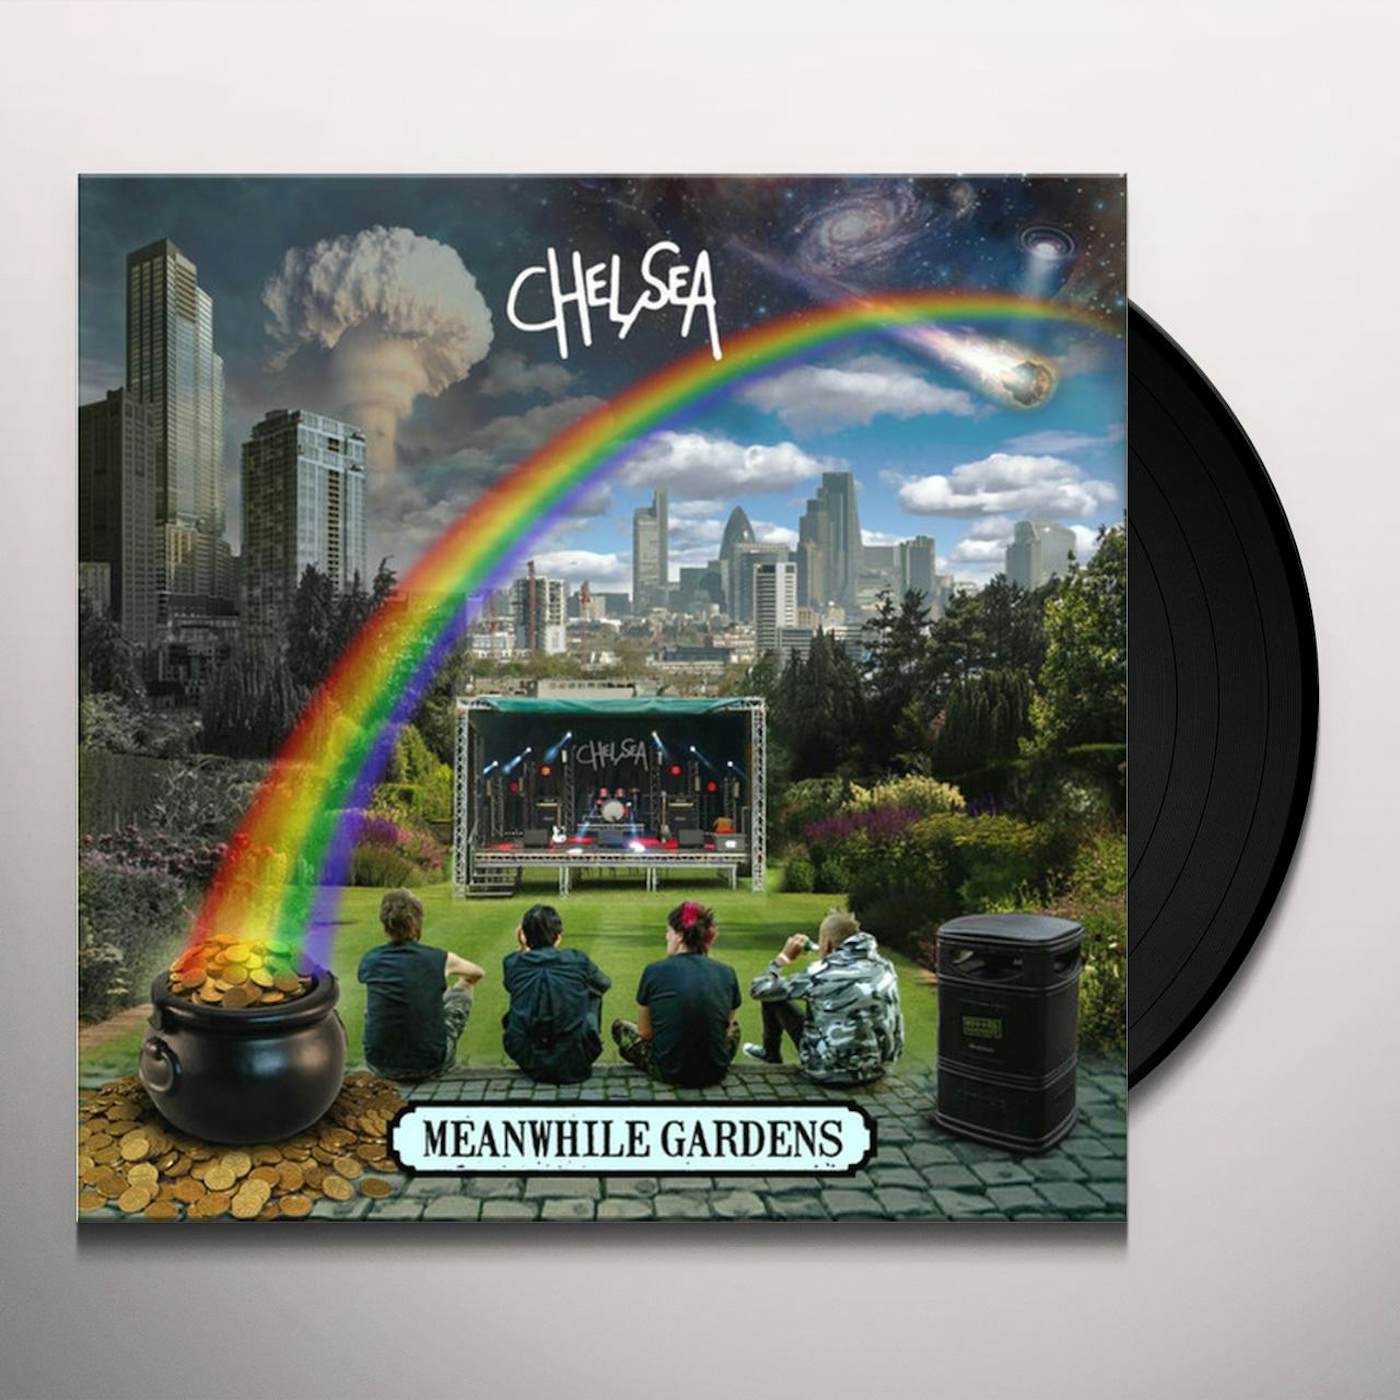 Chelsea MEANWHILE GARDENS (BLUE VINYL) Vinyl Record